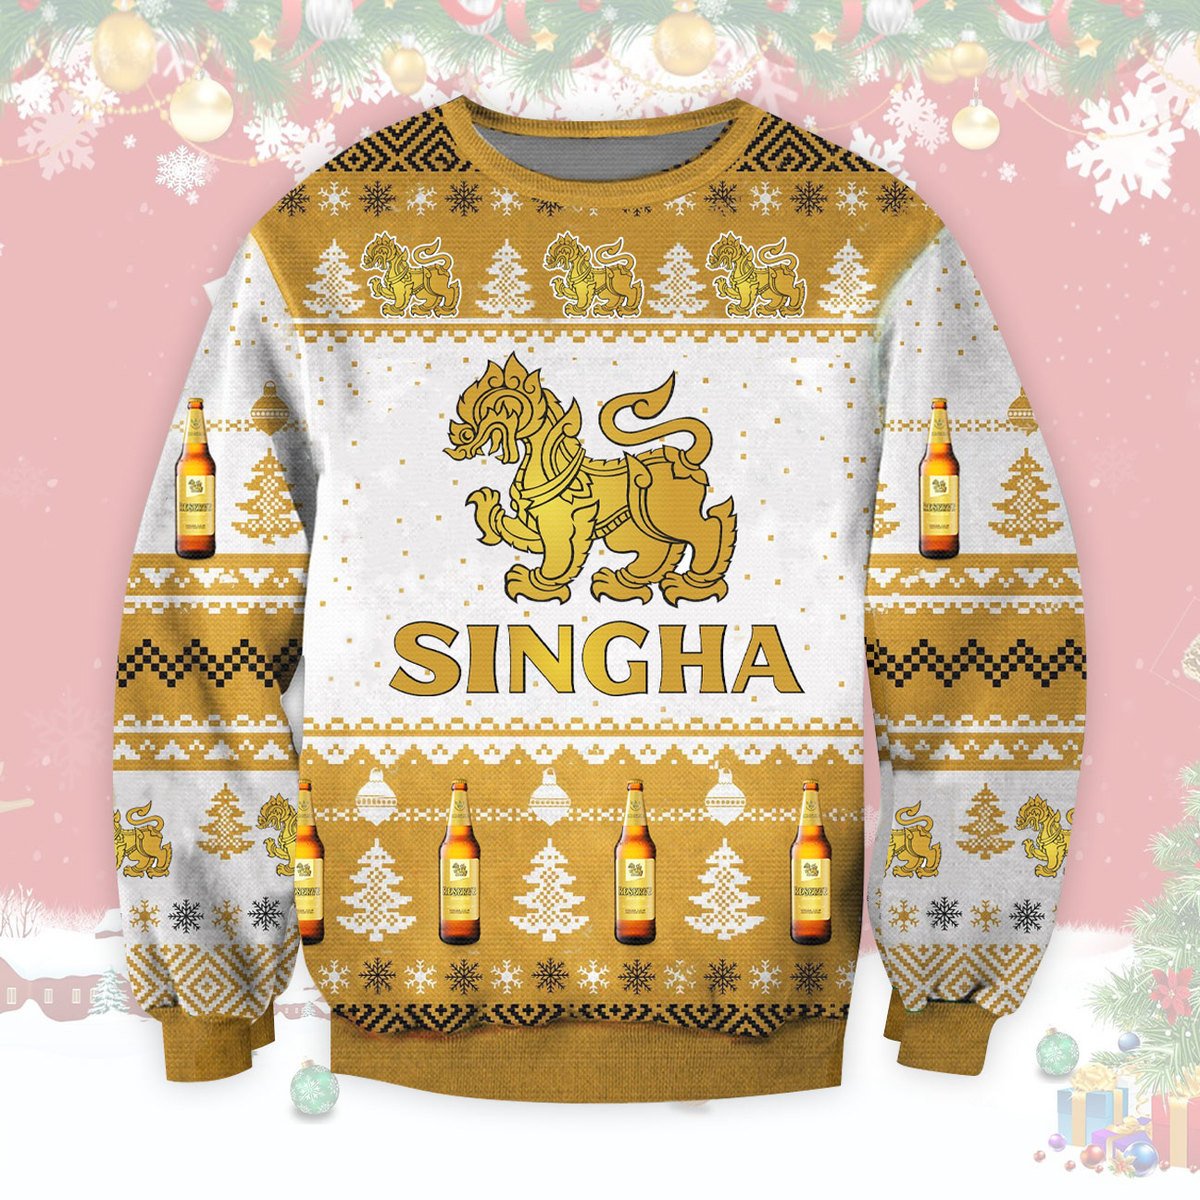 Shingcha beer chritsmas sweater